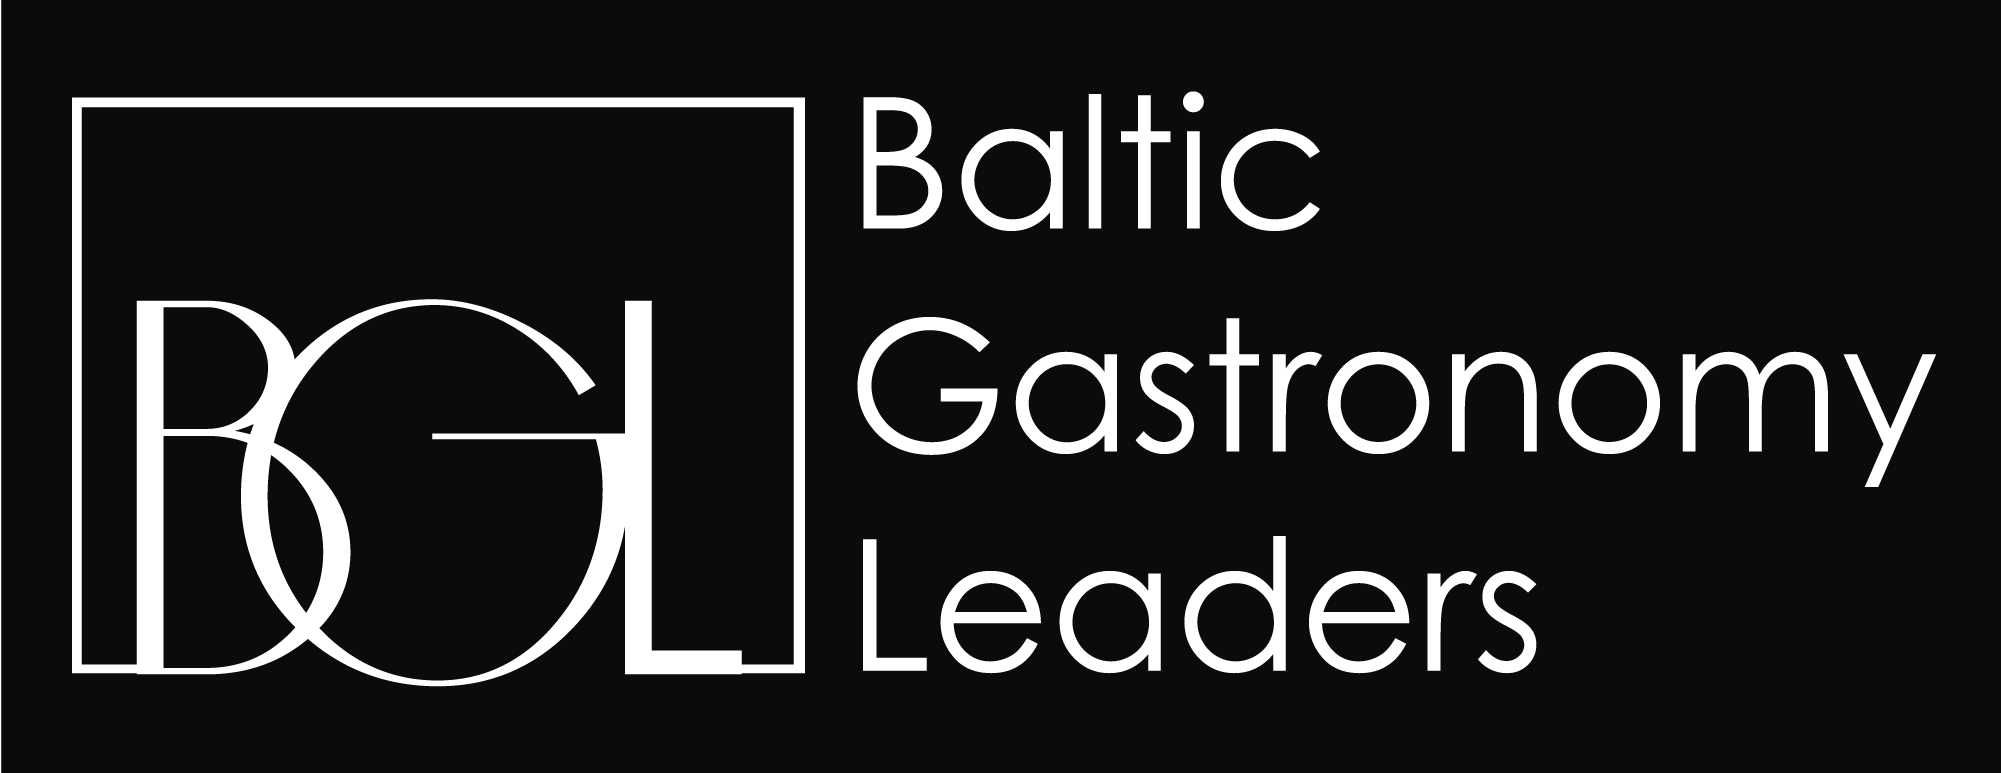 BALTIC GASTRONOMY LEADERS